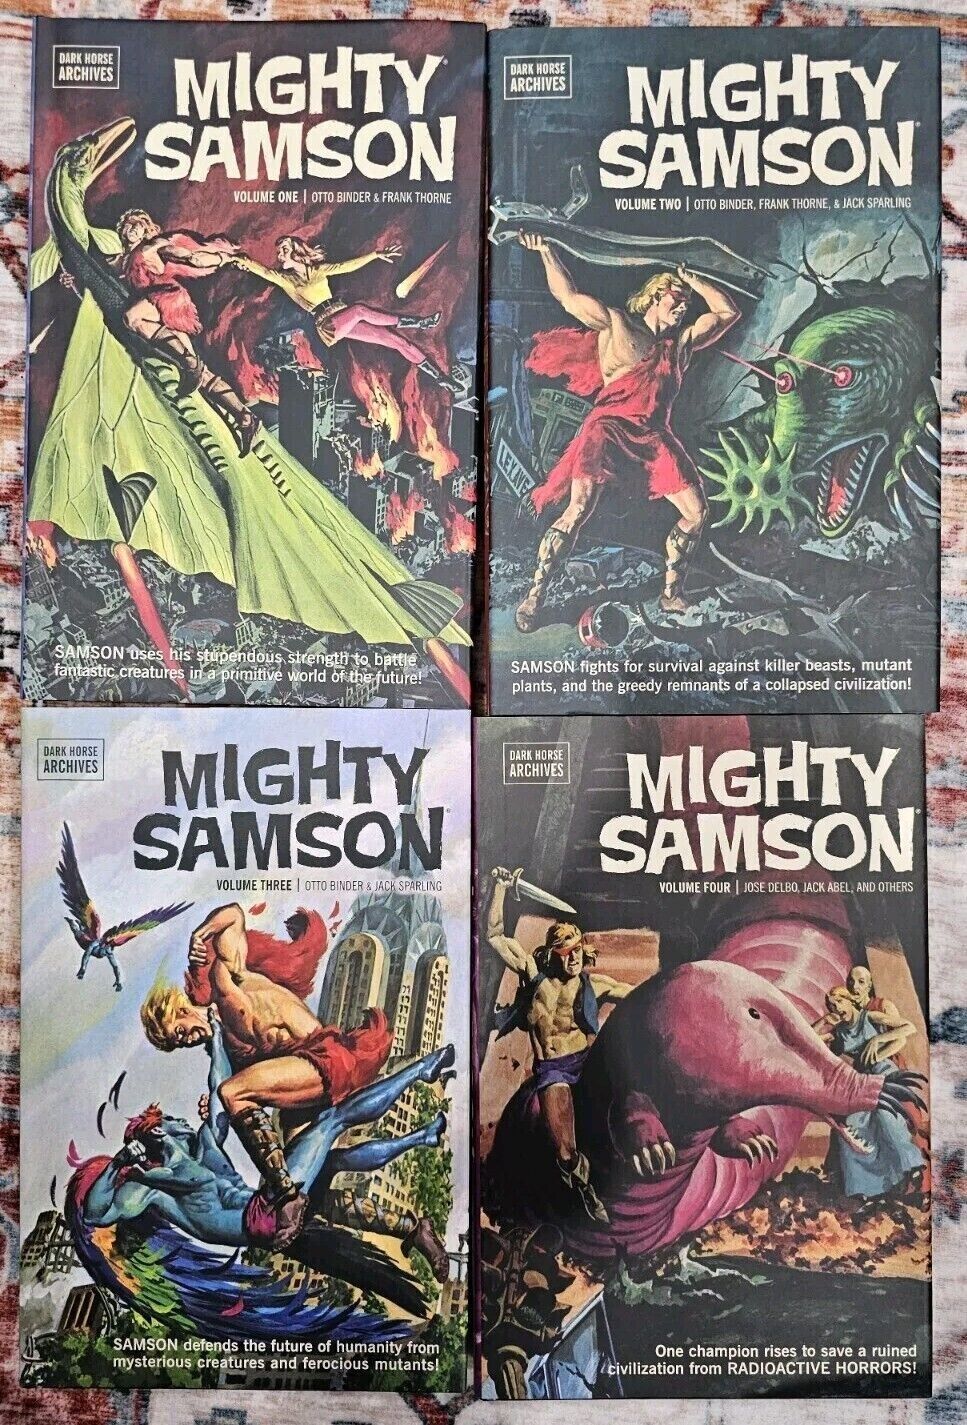 Mighty Samson Dark Horse Archives Vol. 1, 2, 3, 4 Full Set HC Gold Key NICE